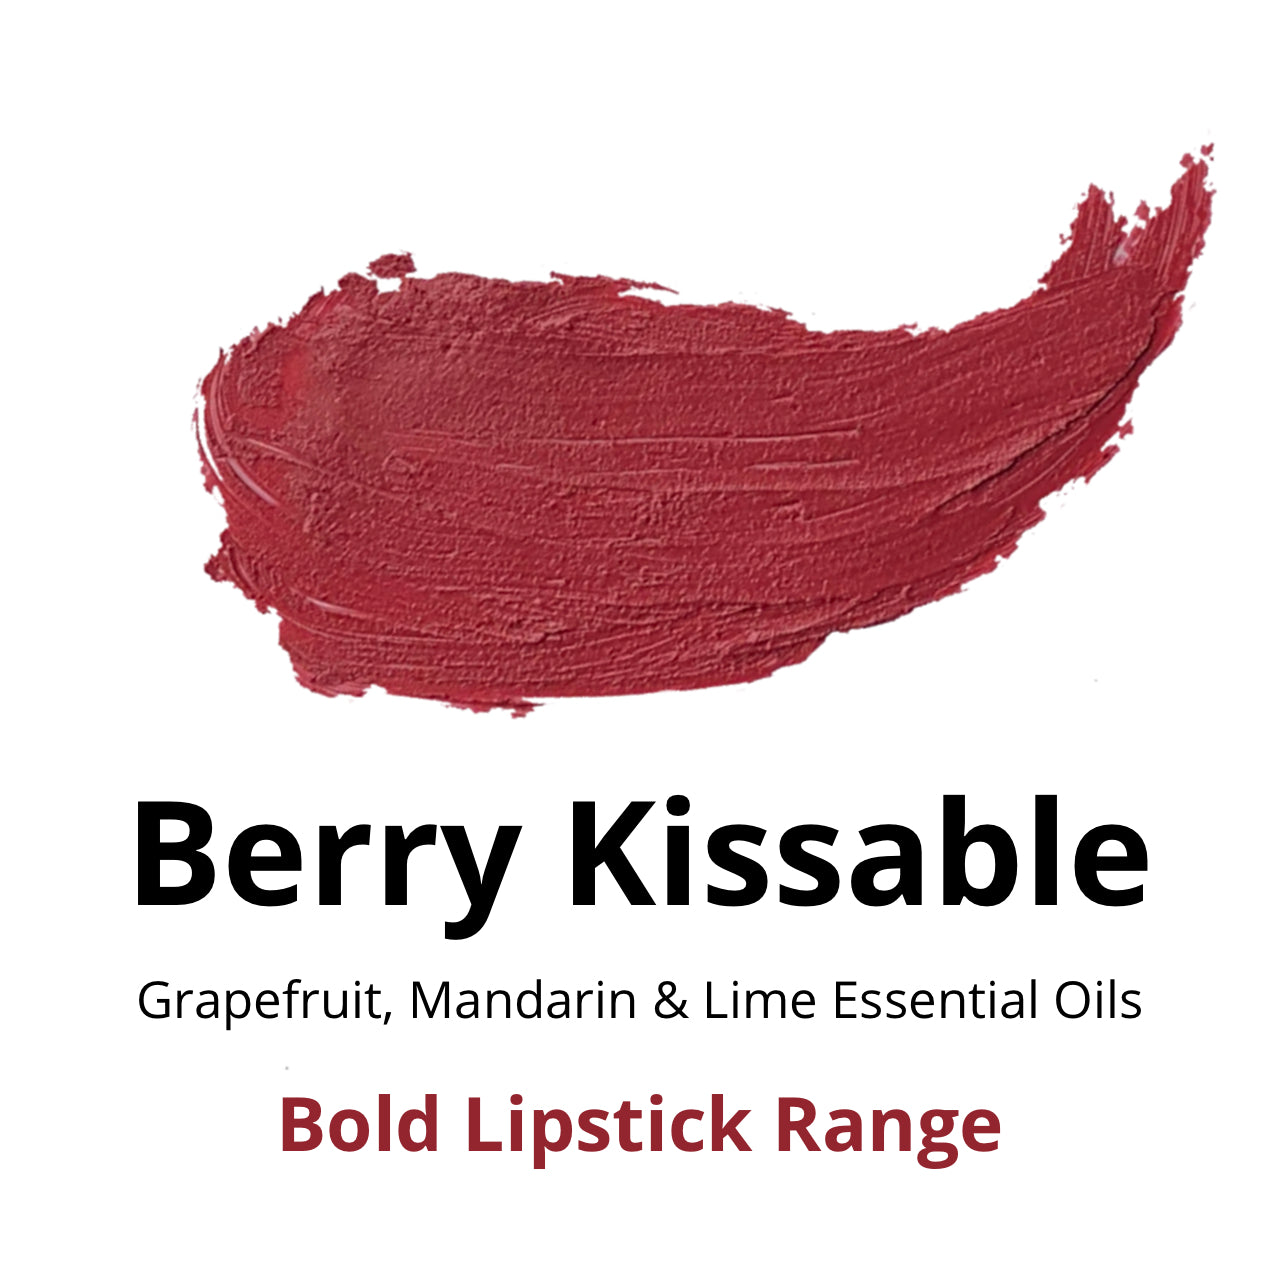 Berry Kissable - Vibrant Berry Pink Red Orange Long Lasting Organic Lipstick